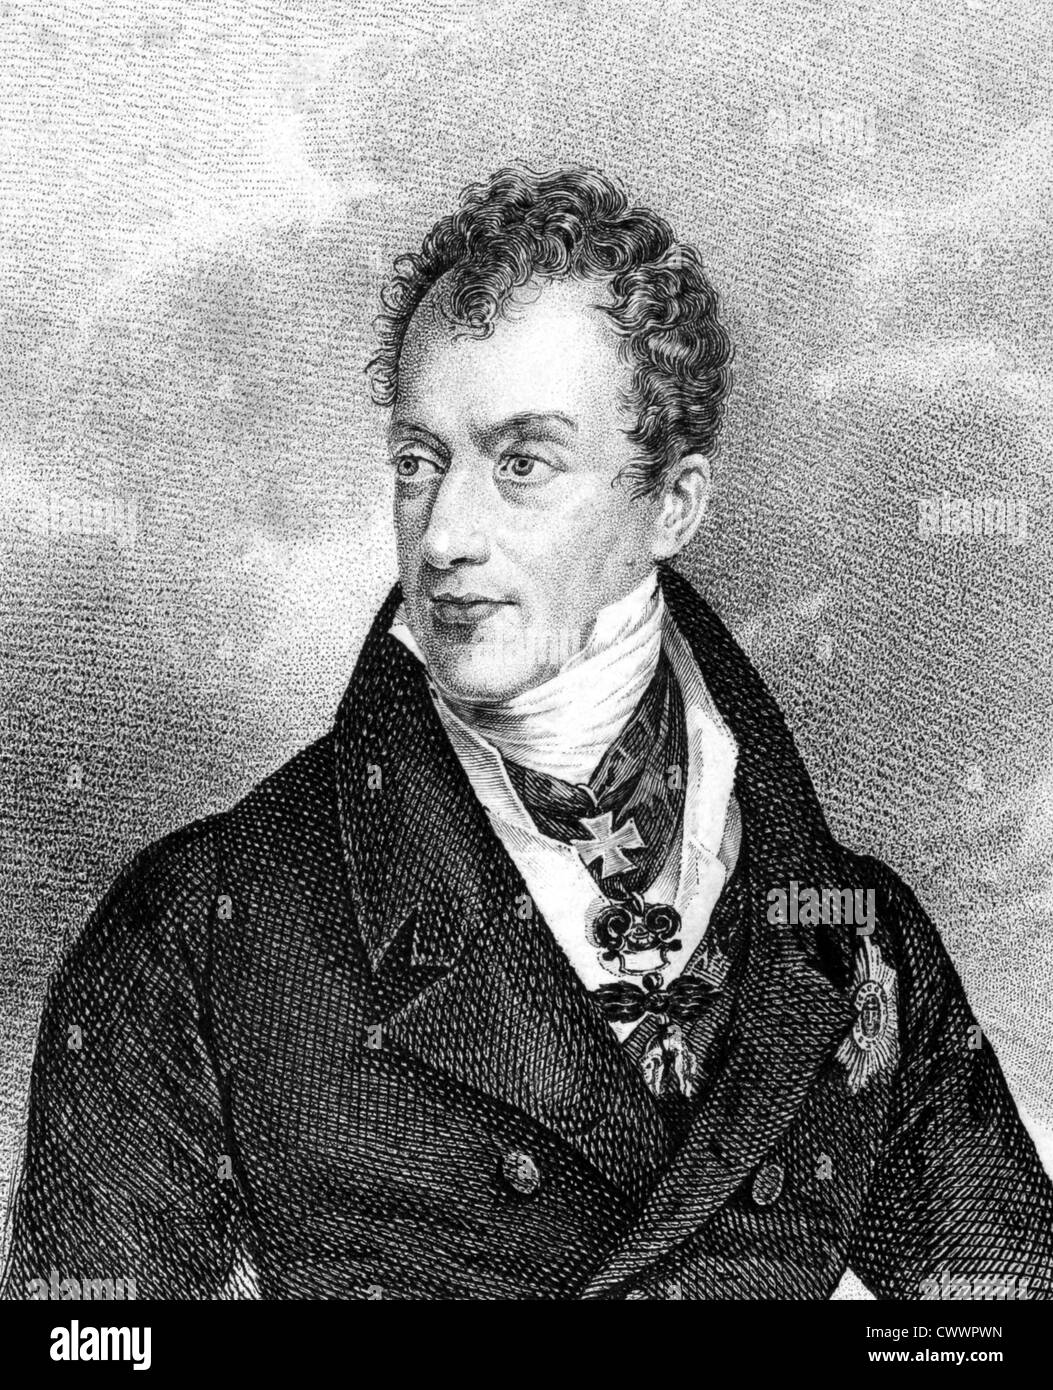 Klemens von Metternich (1773-1859) on engraving from 1859. German-born Austrian politician and statesman. Stock Photo